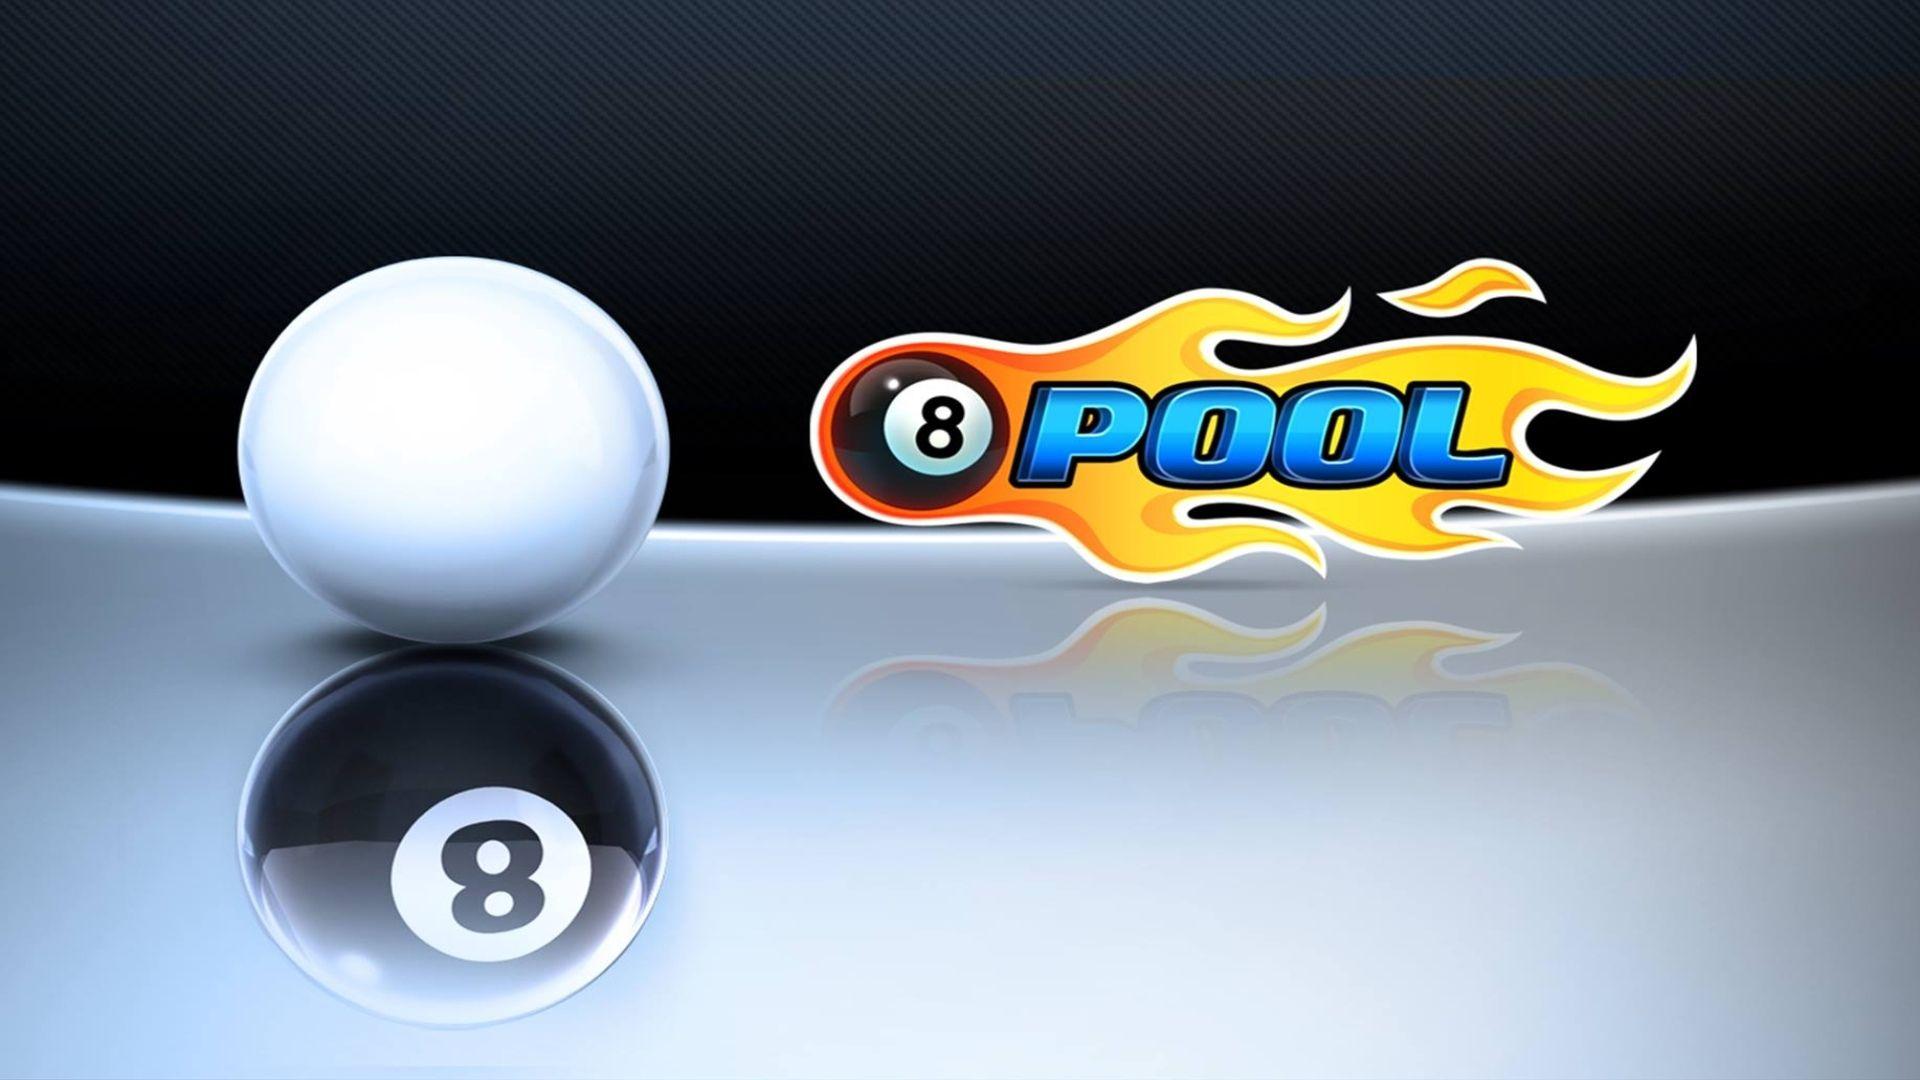 8 Ball Pool MOD MENU APK Terbaru 2022 v5.8.1